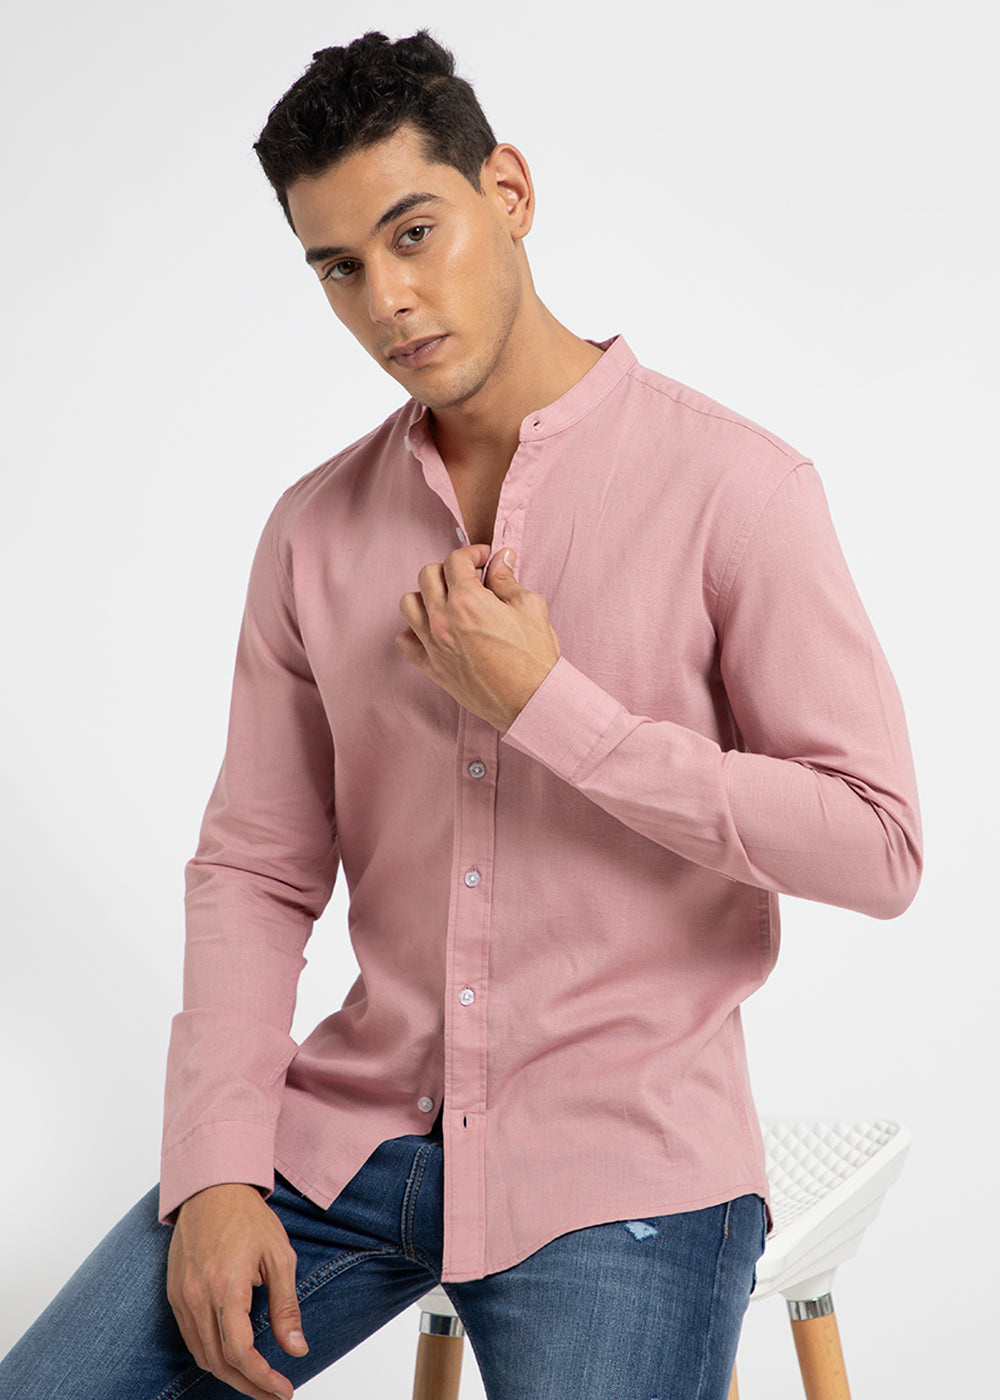 Sakura Pink Cotton Linen Shirt